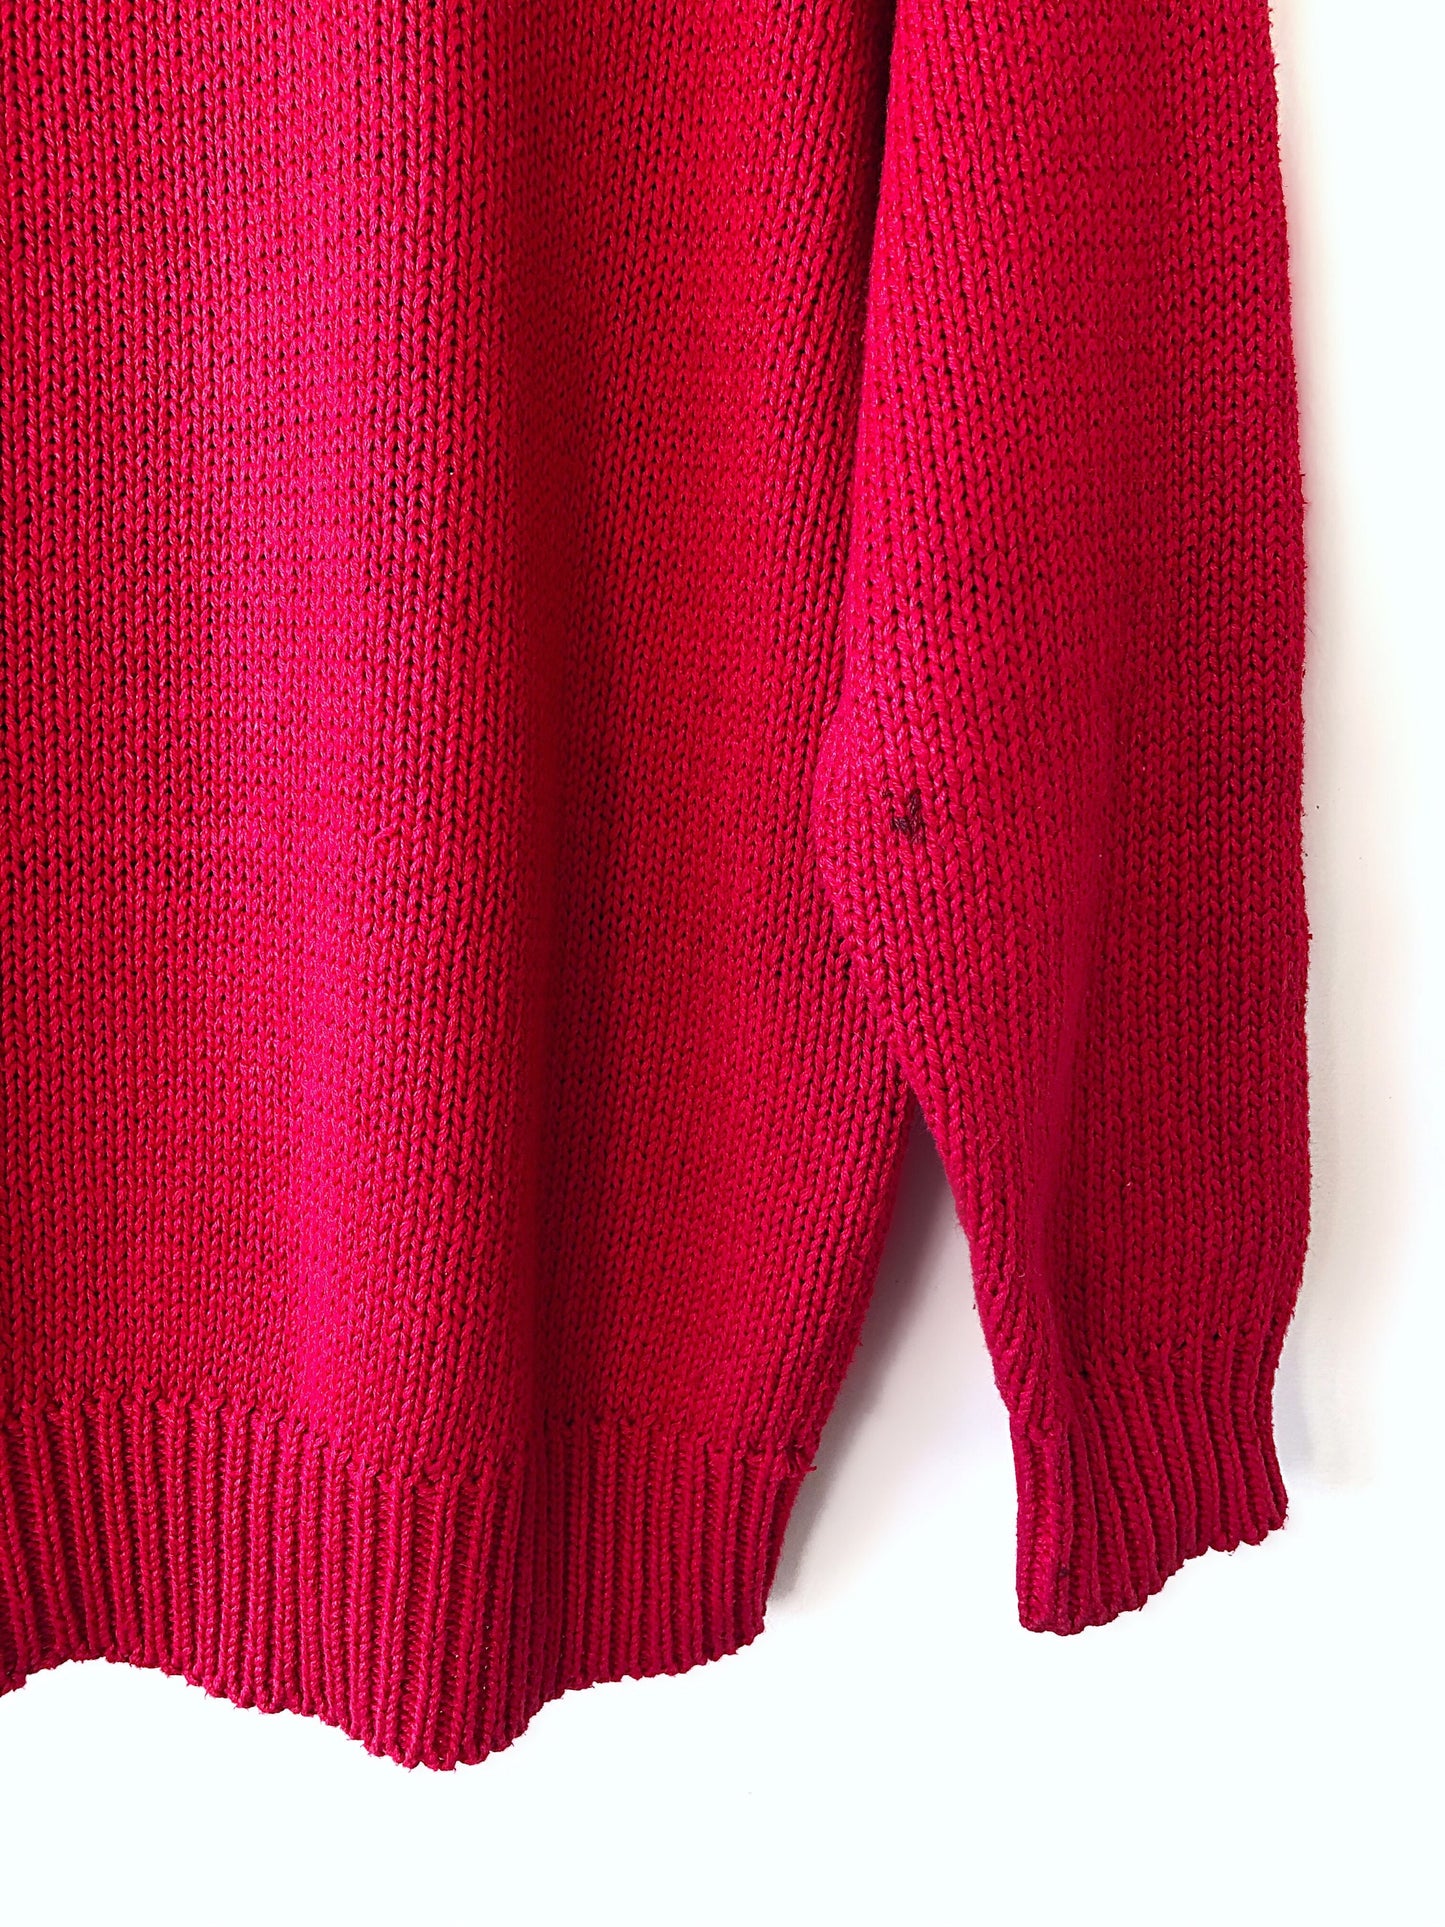 80's SNOWMAN Chunky Knit Novelty Ugly Holiday Sweater Size Medium